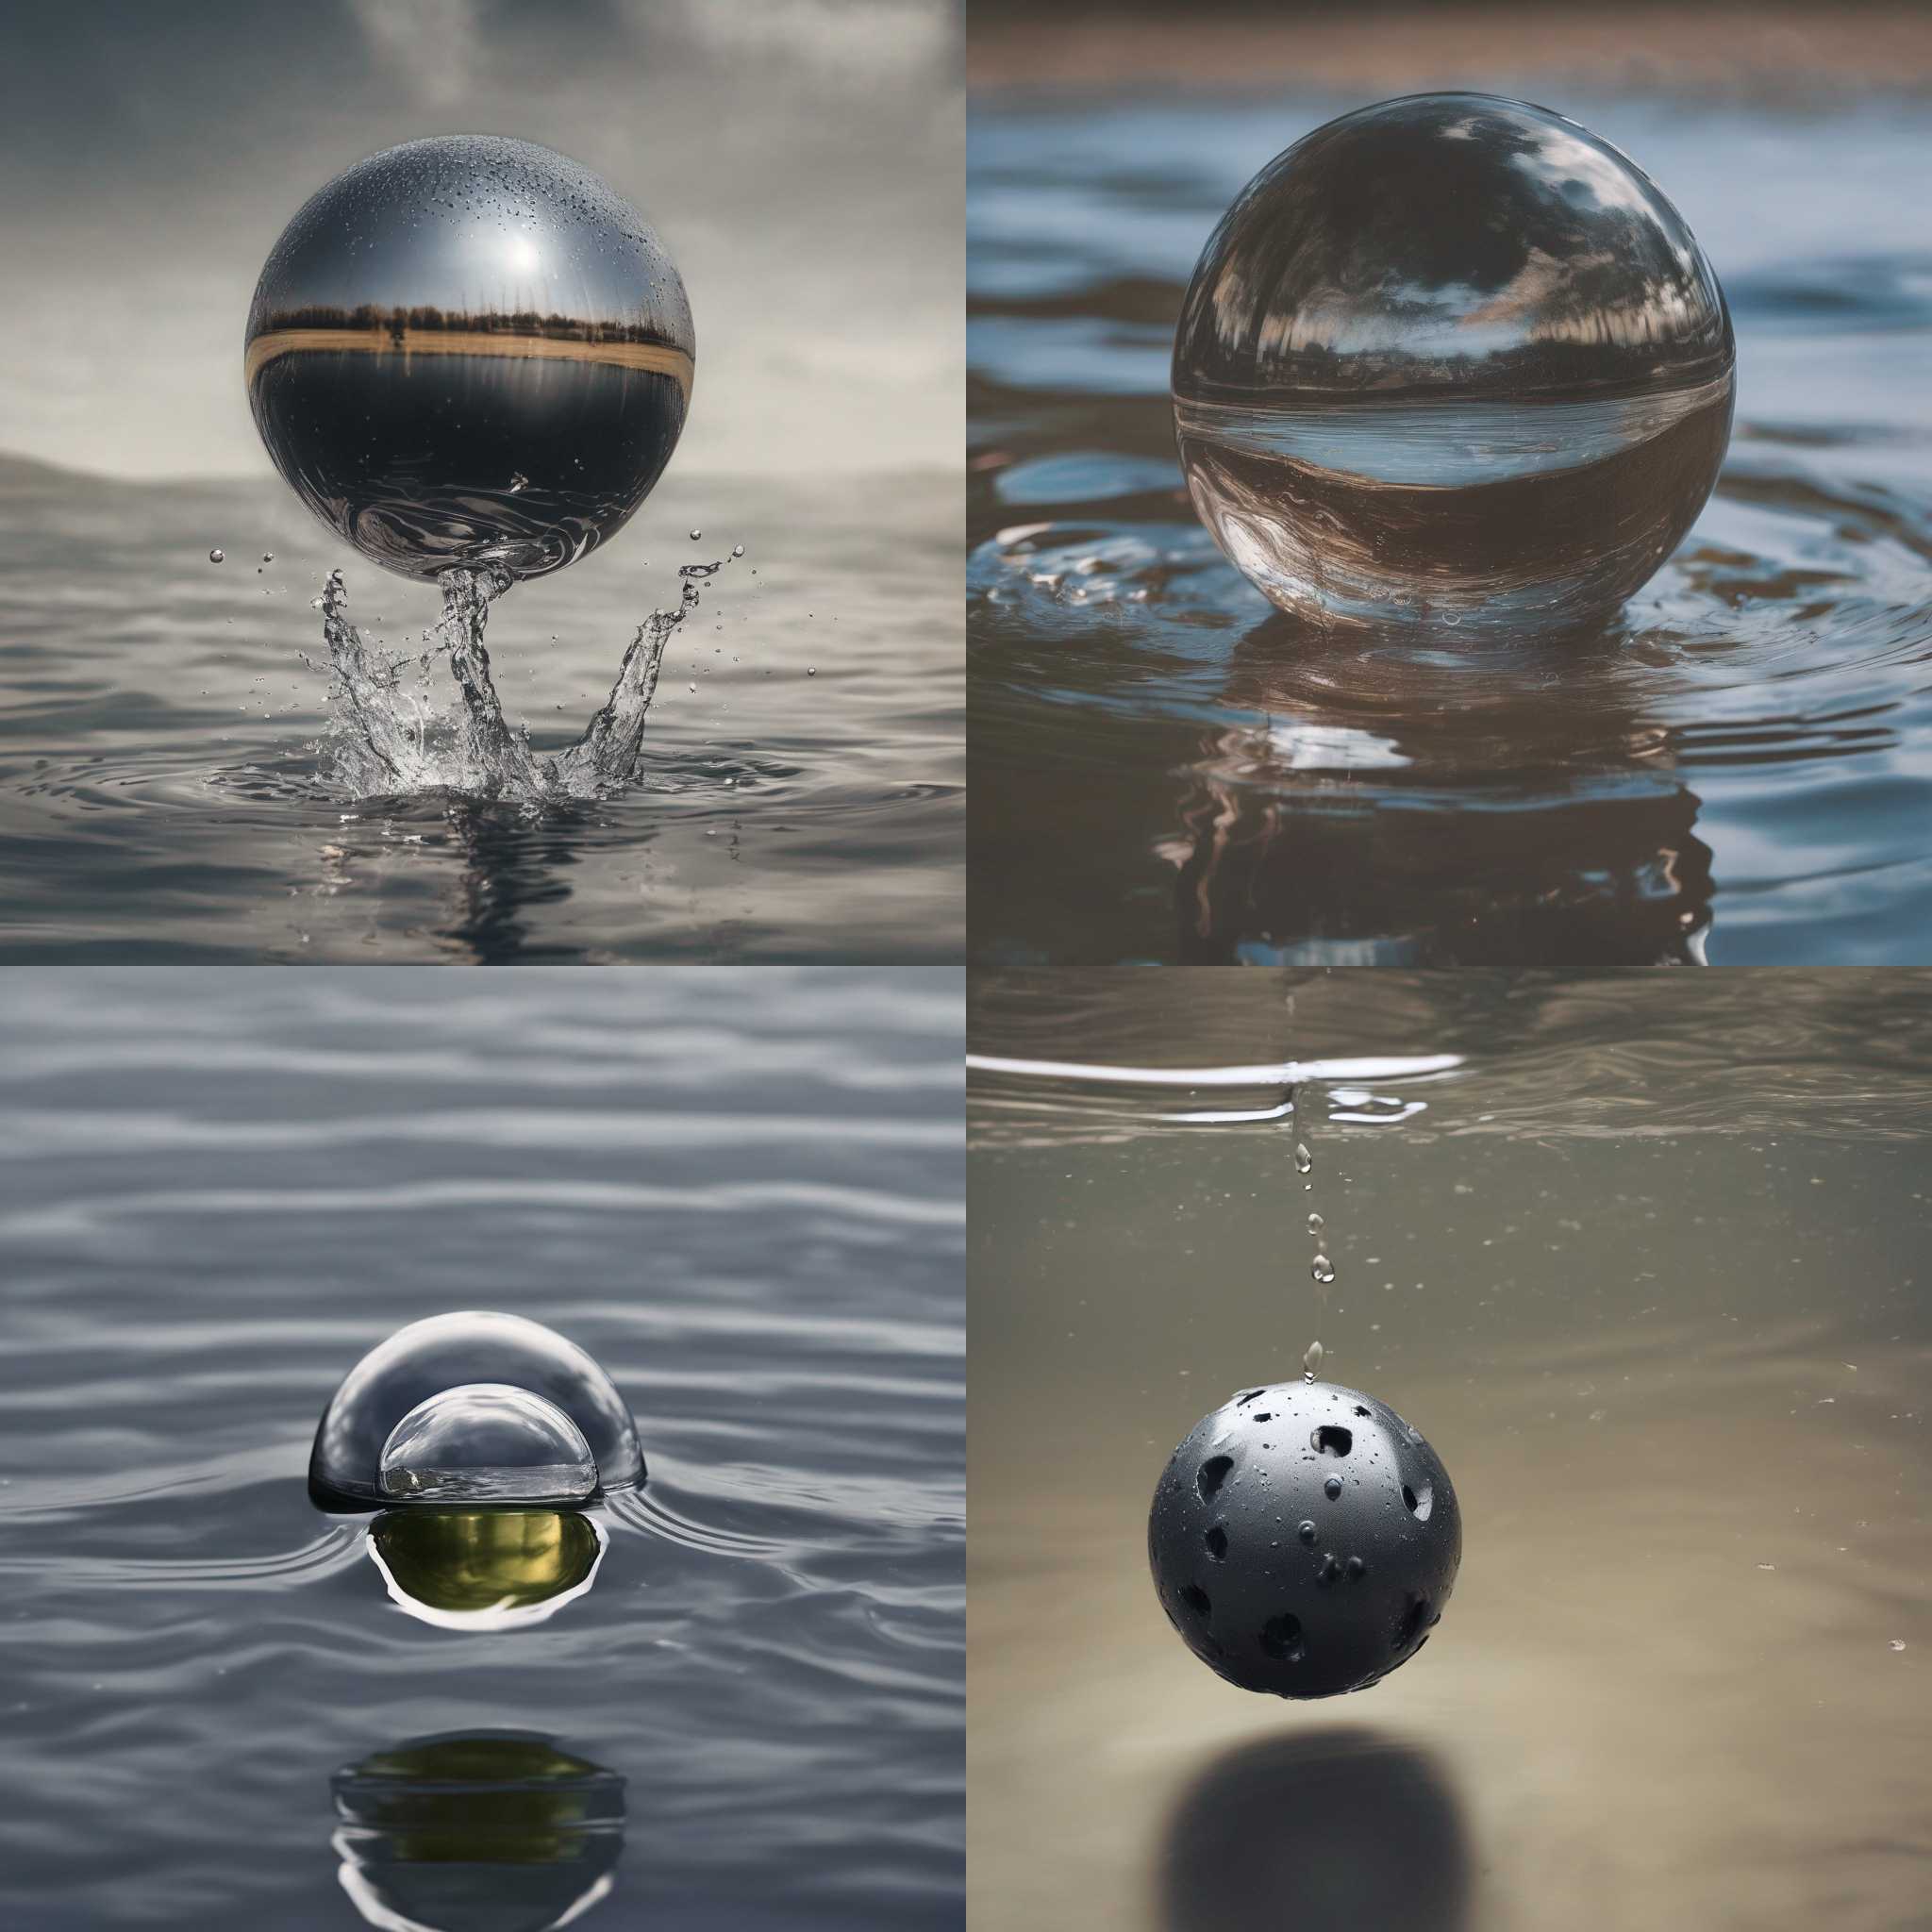 An iron ball in water